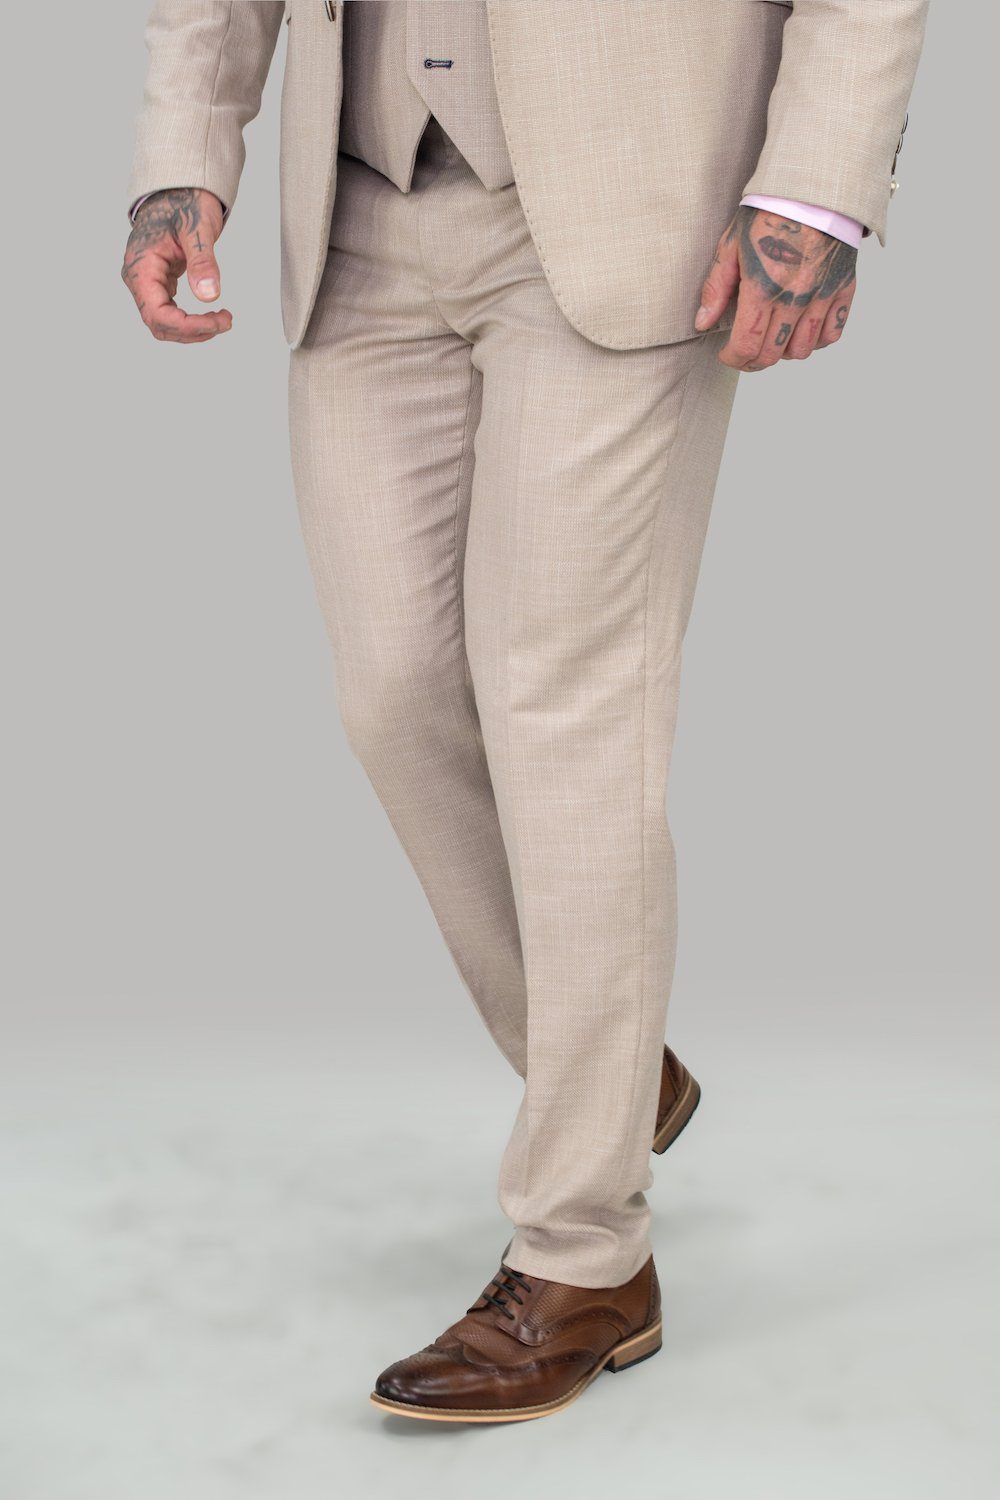 fcity.in - Black Cream Slim Fit Formal Trouser Formal Pant For Men / Fancy